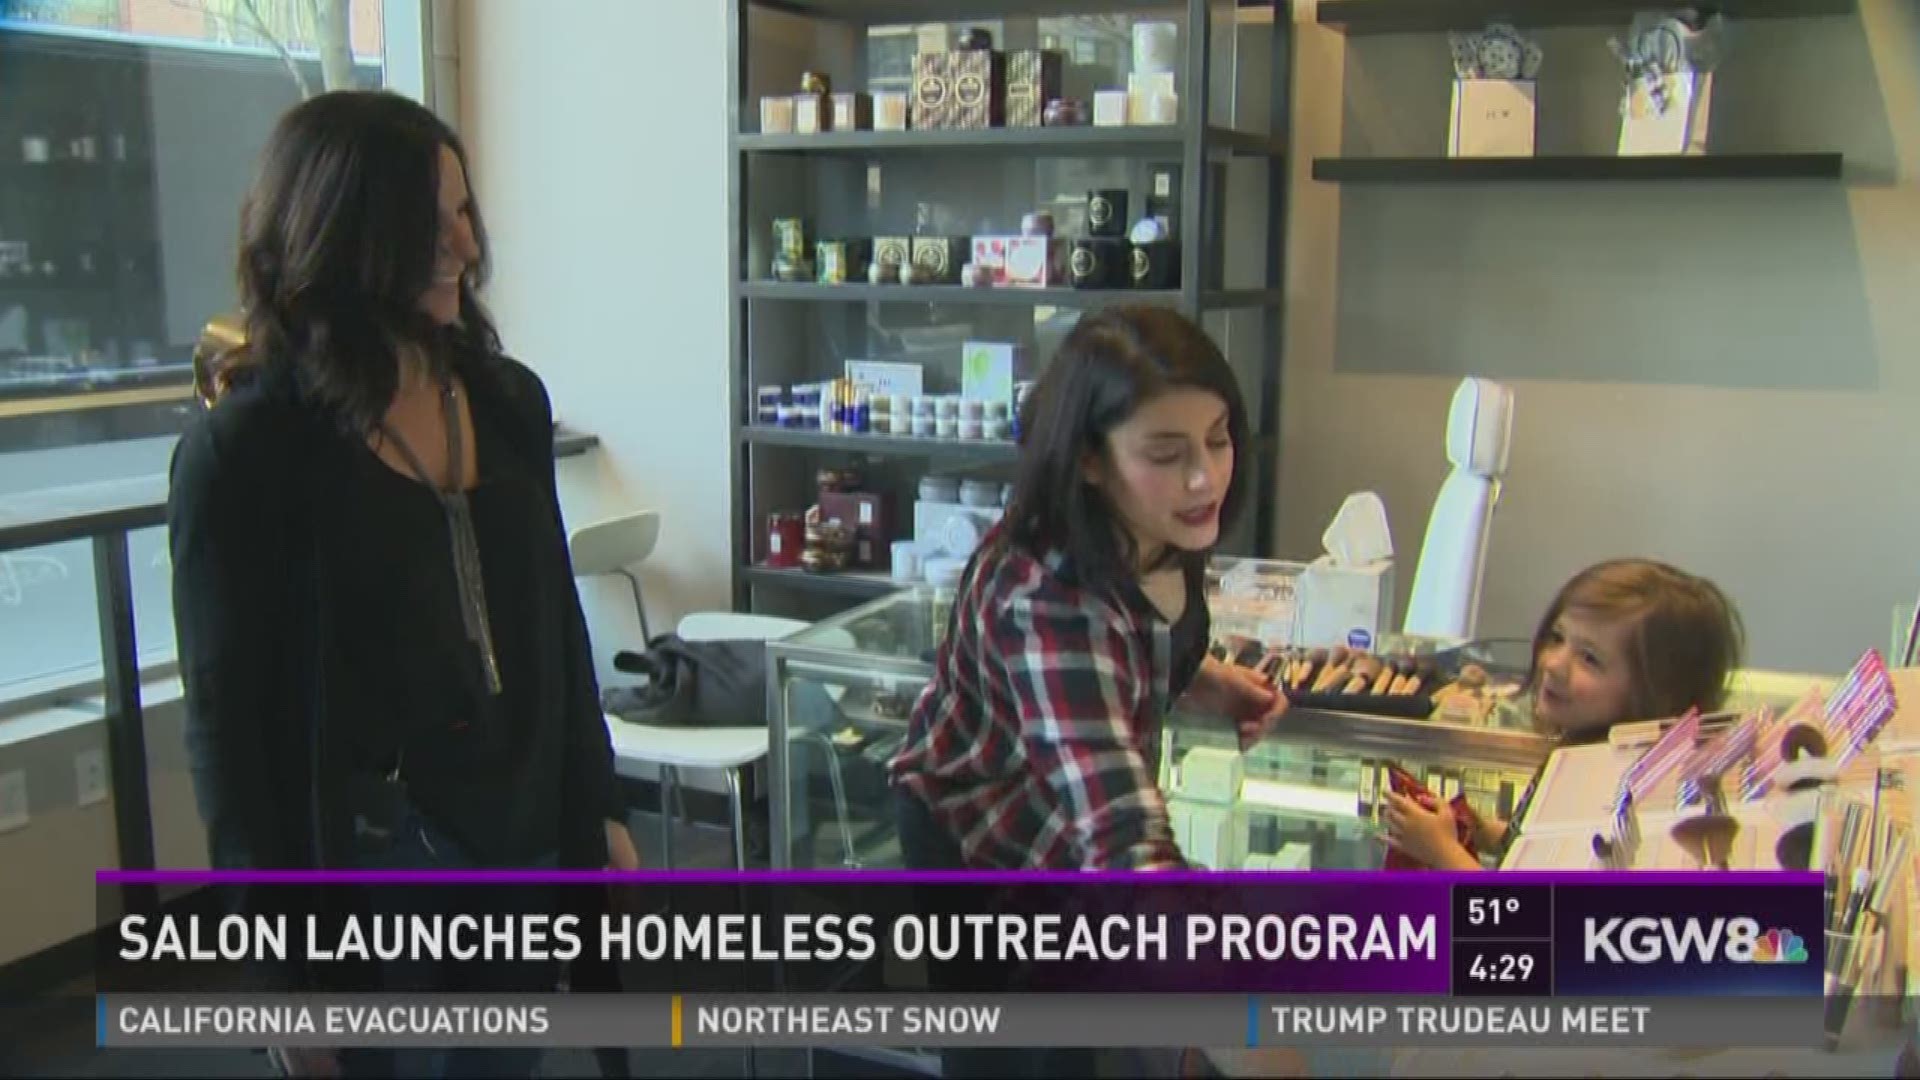 Salon launches homeless outreach program